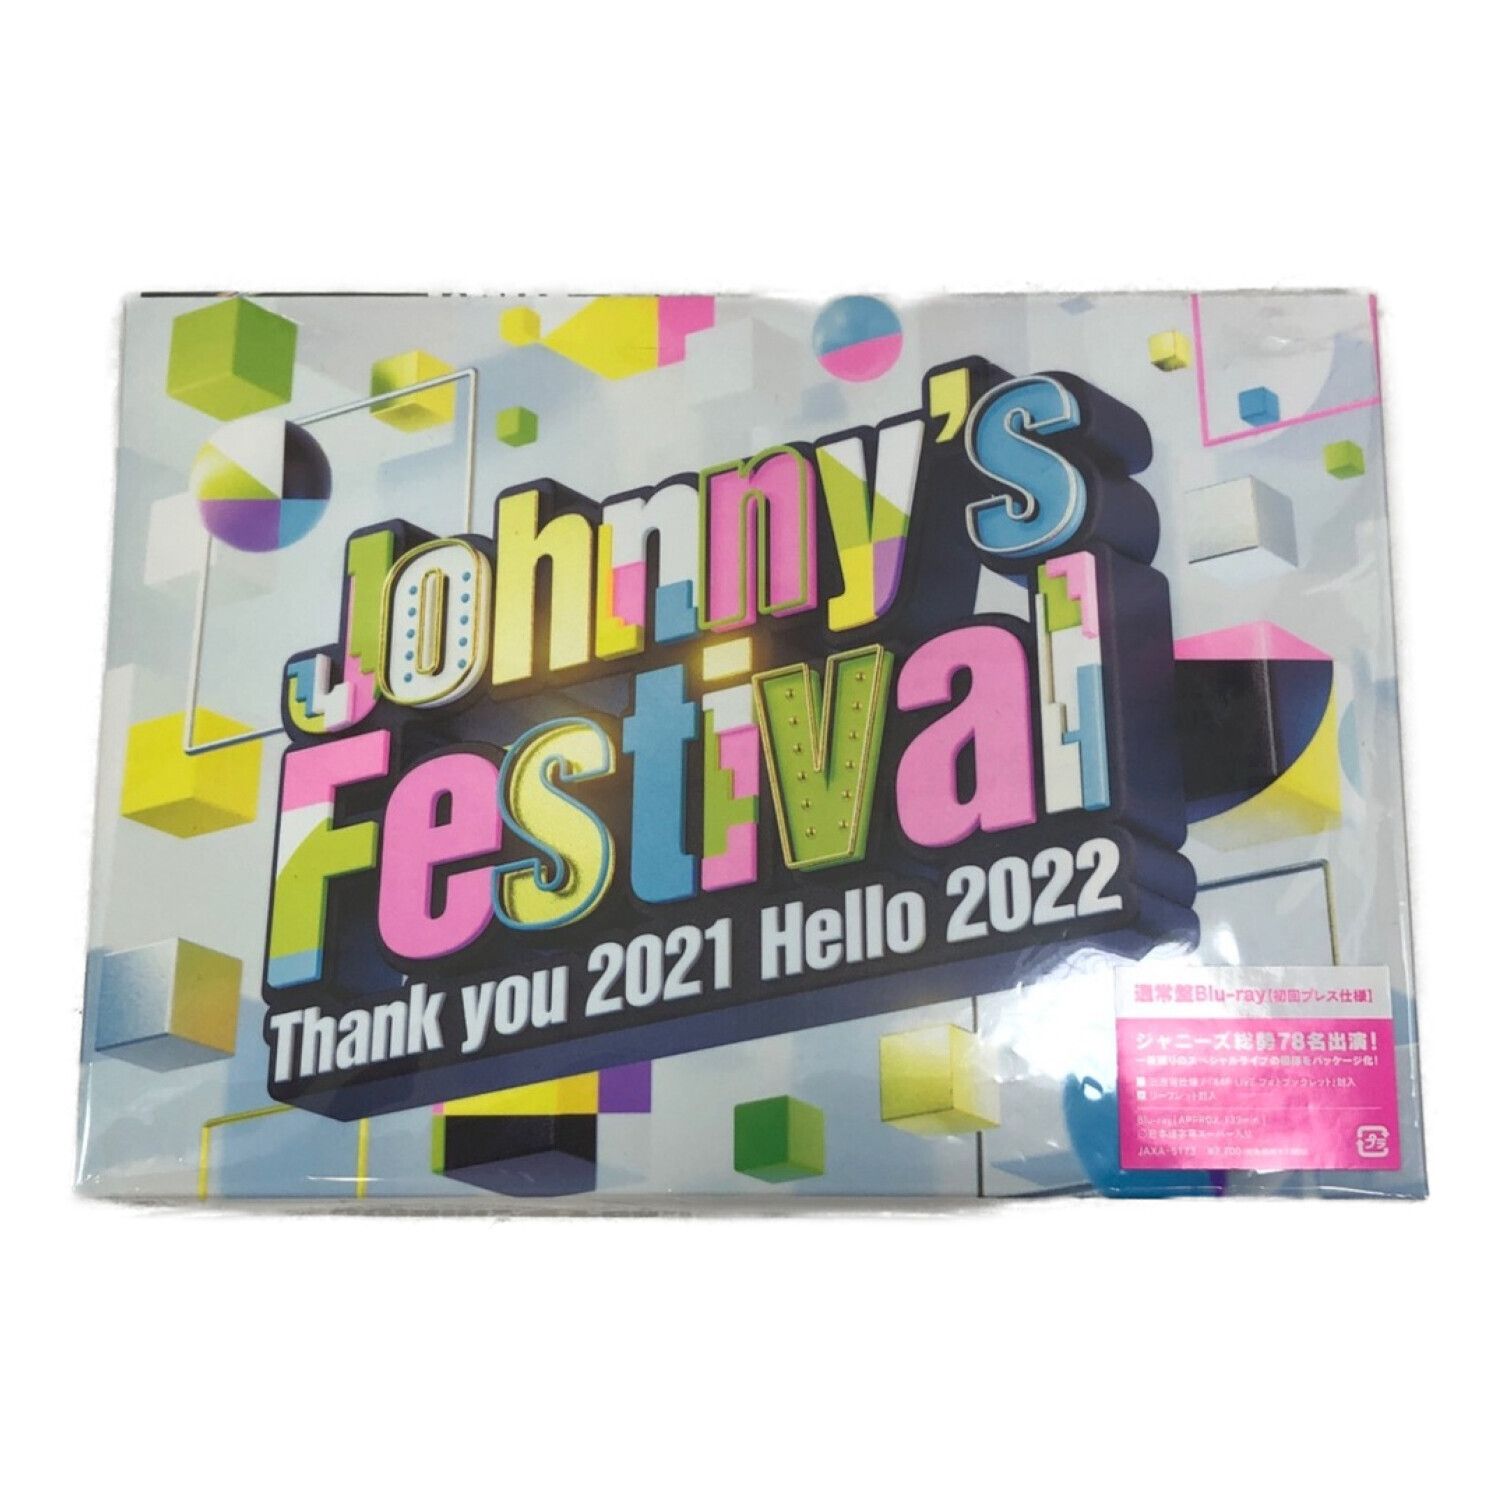 Johnny's Festival～Thank you 2021 Hello …SnowMan